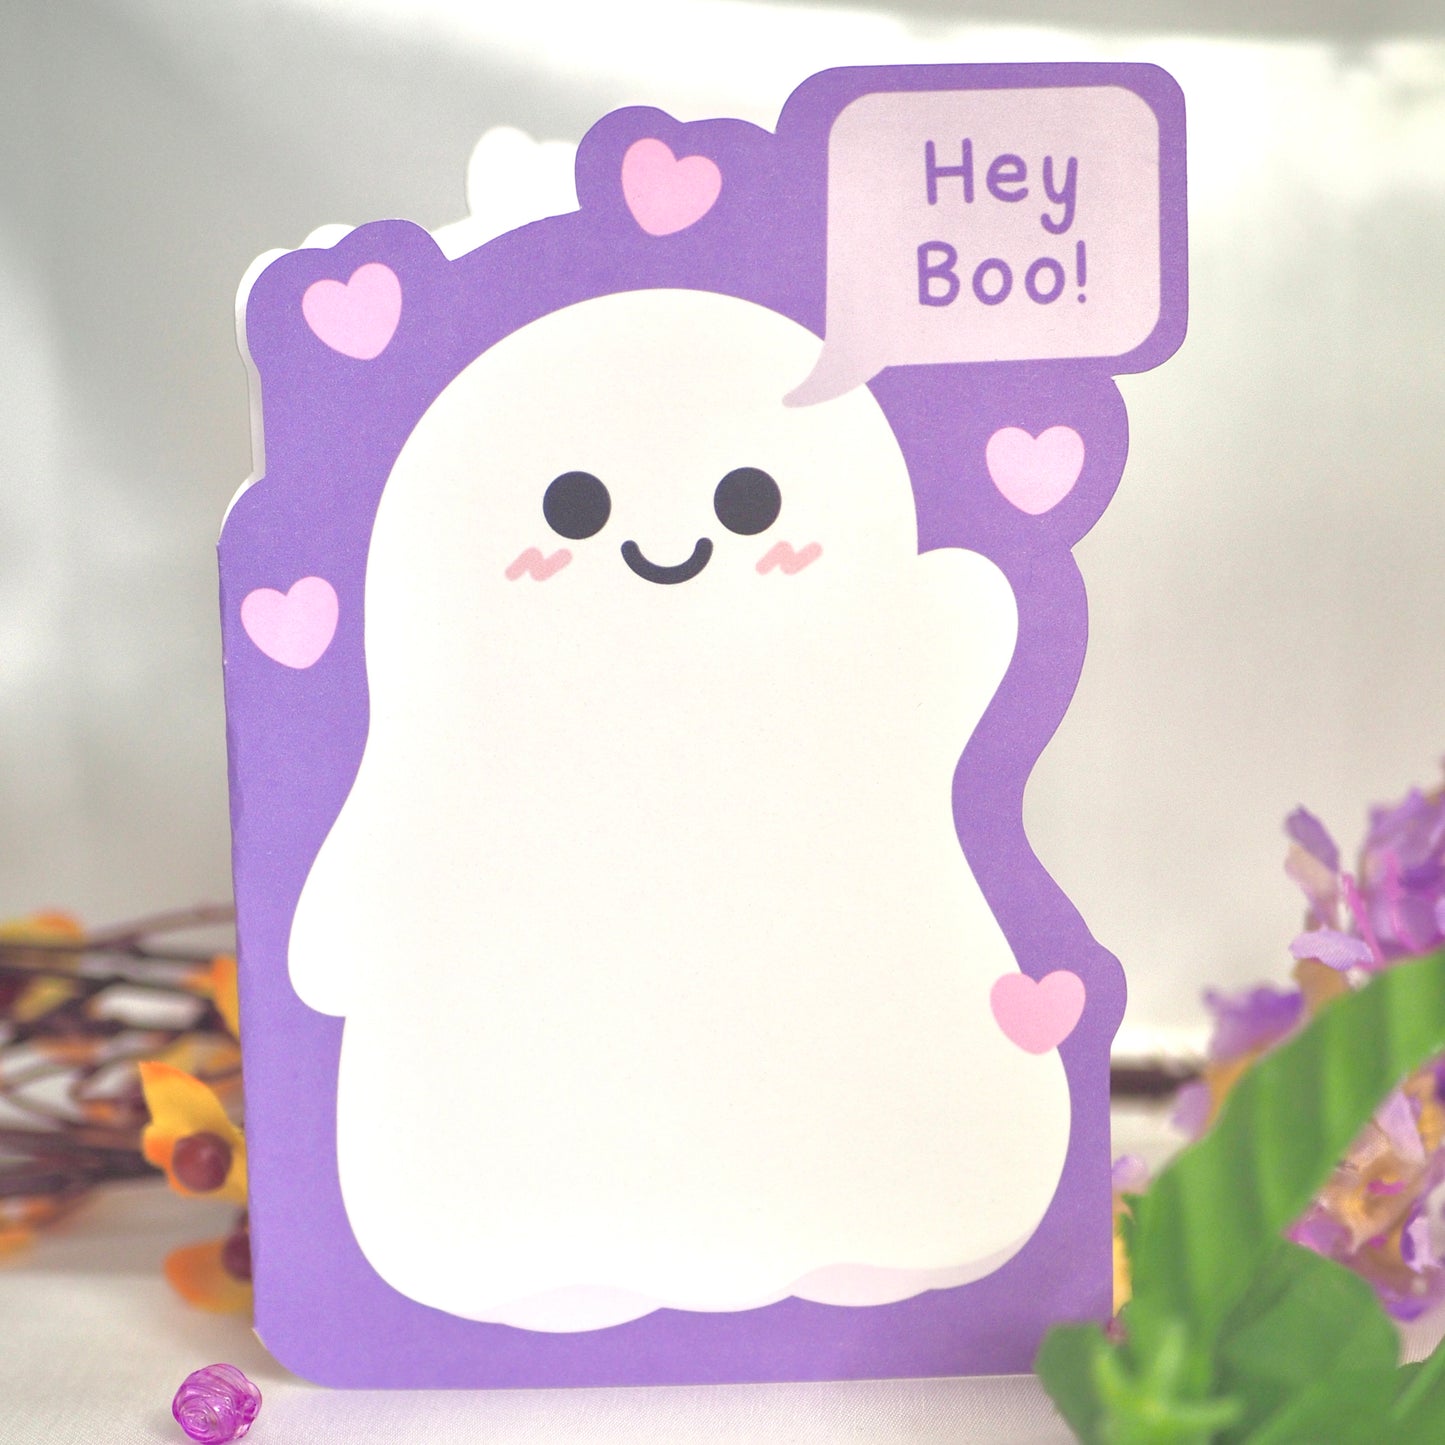 Hey Boo - Cute Ghost Greeting Card